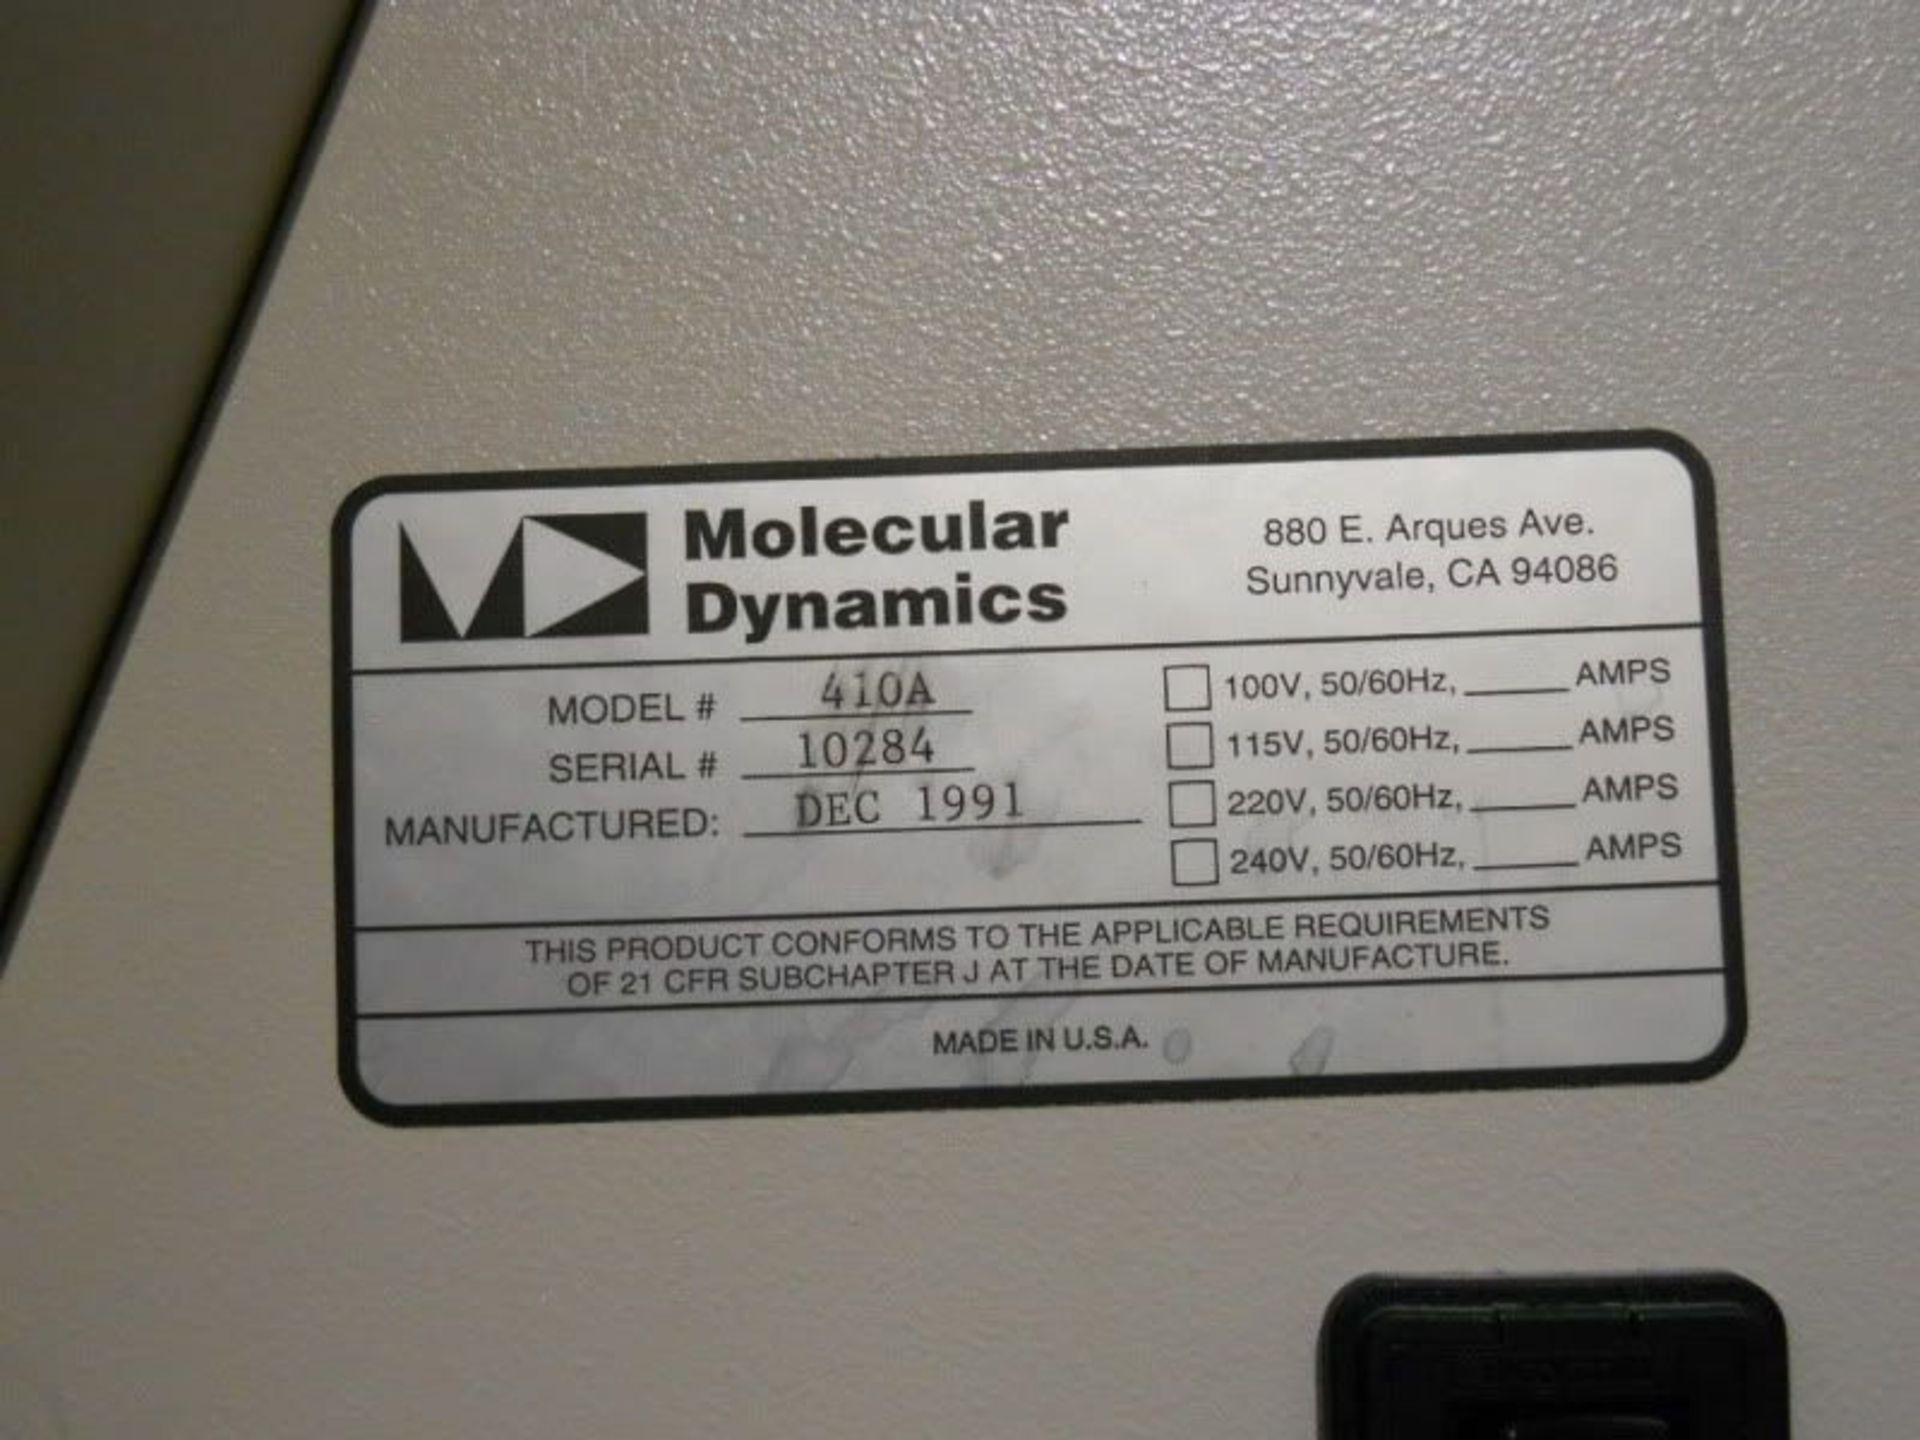 Molecular Dynamics Image Eraser Model 410A, Qty 1, 330813510131 - Image 5 of 5